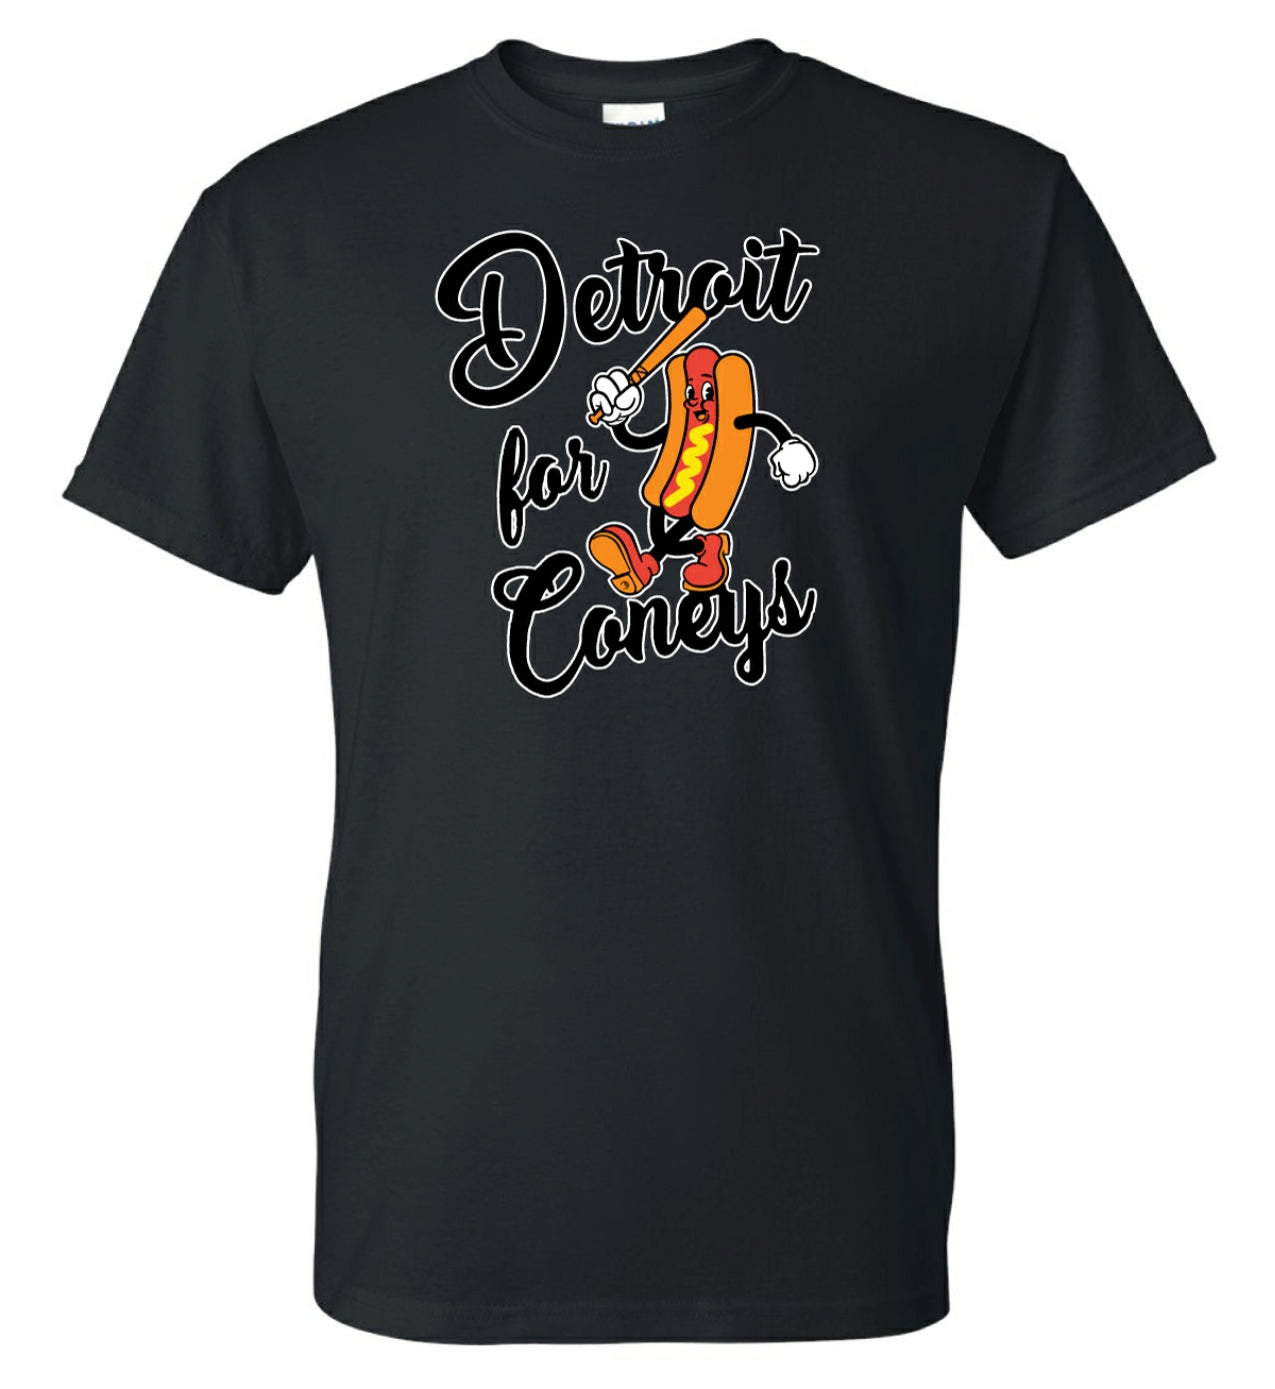 Coney Dog Detroit T- Shirt